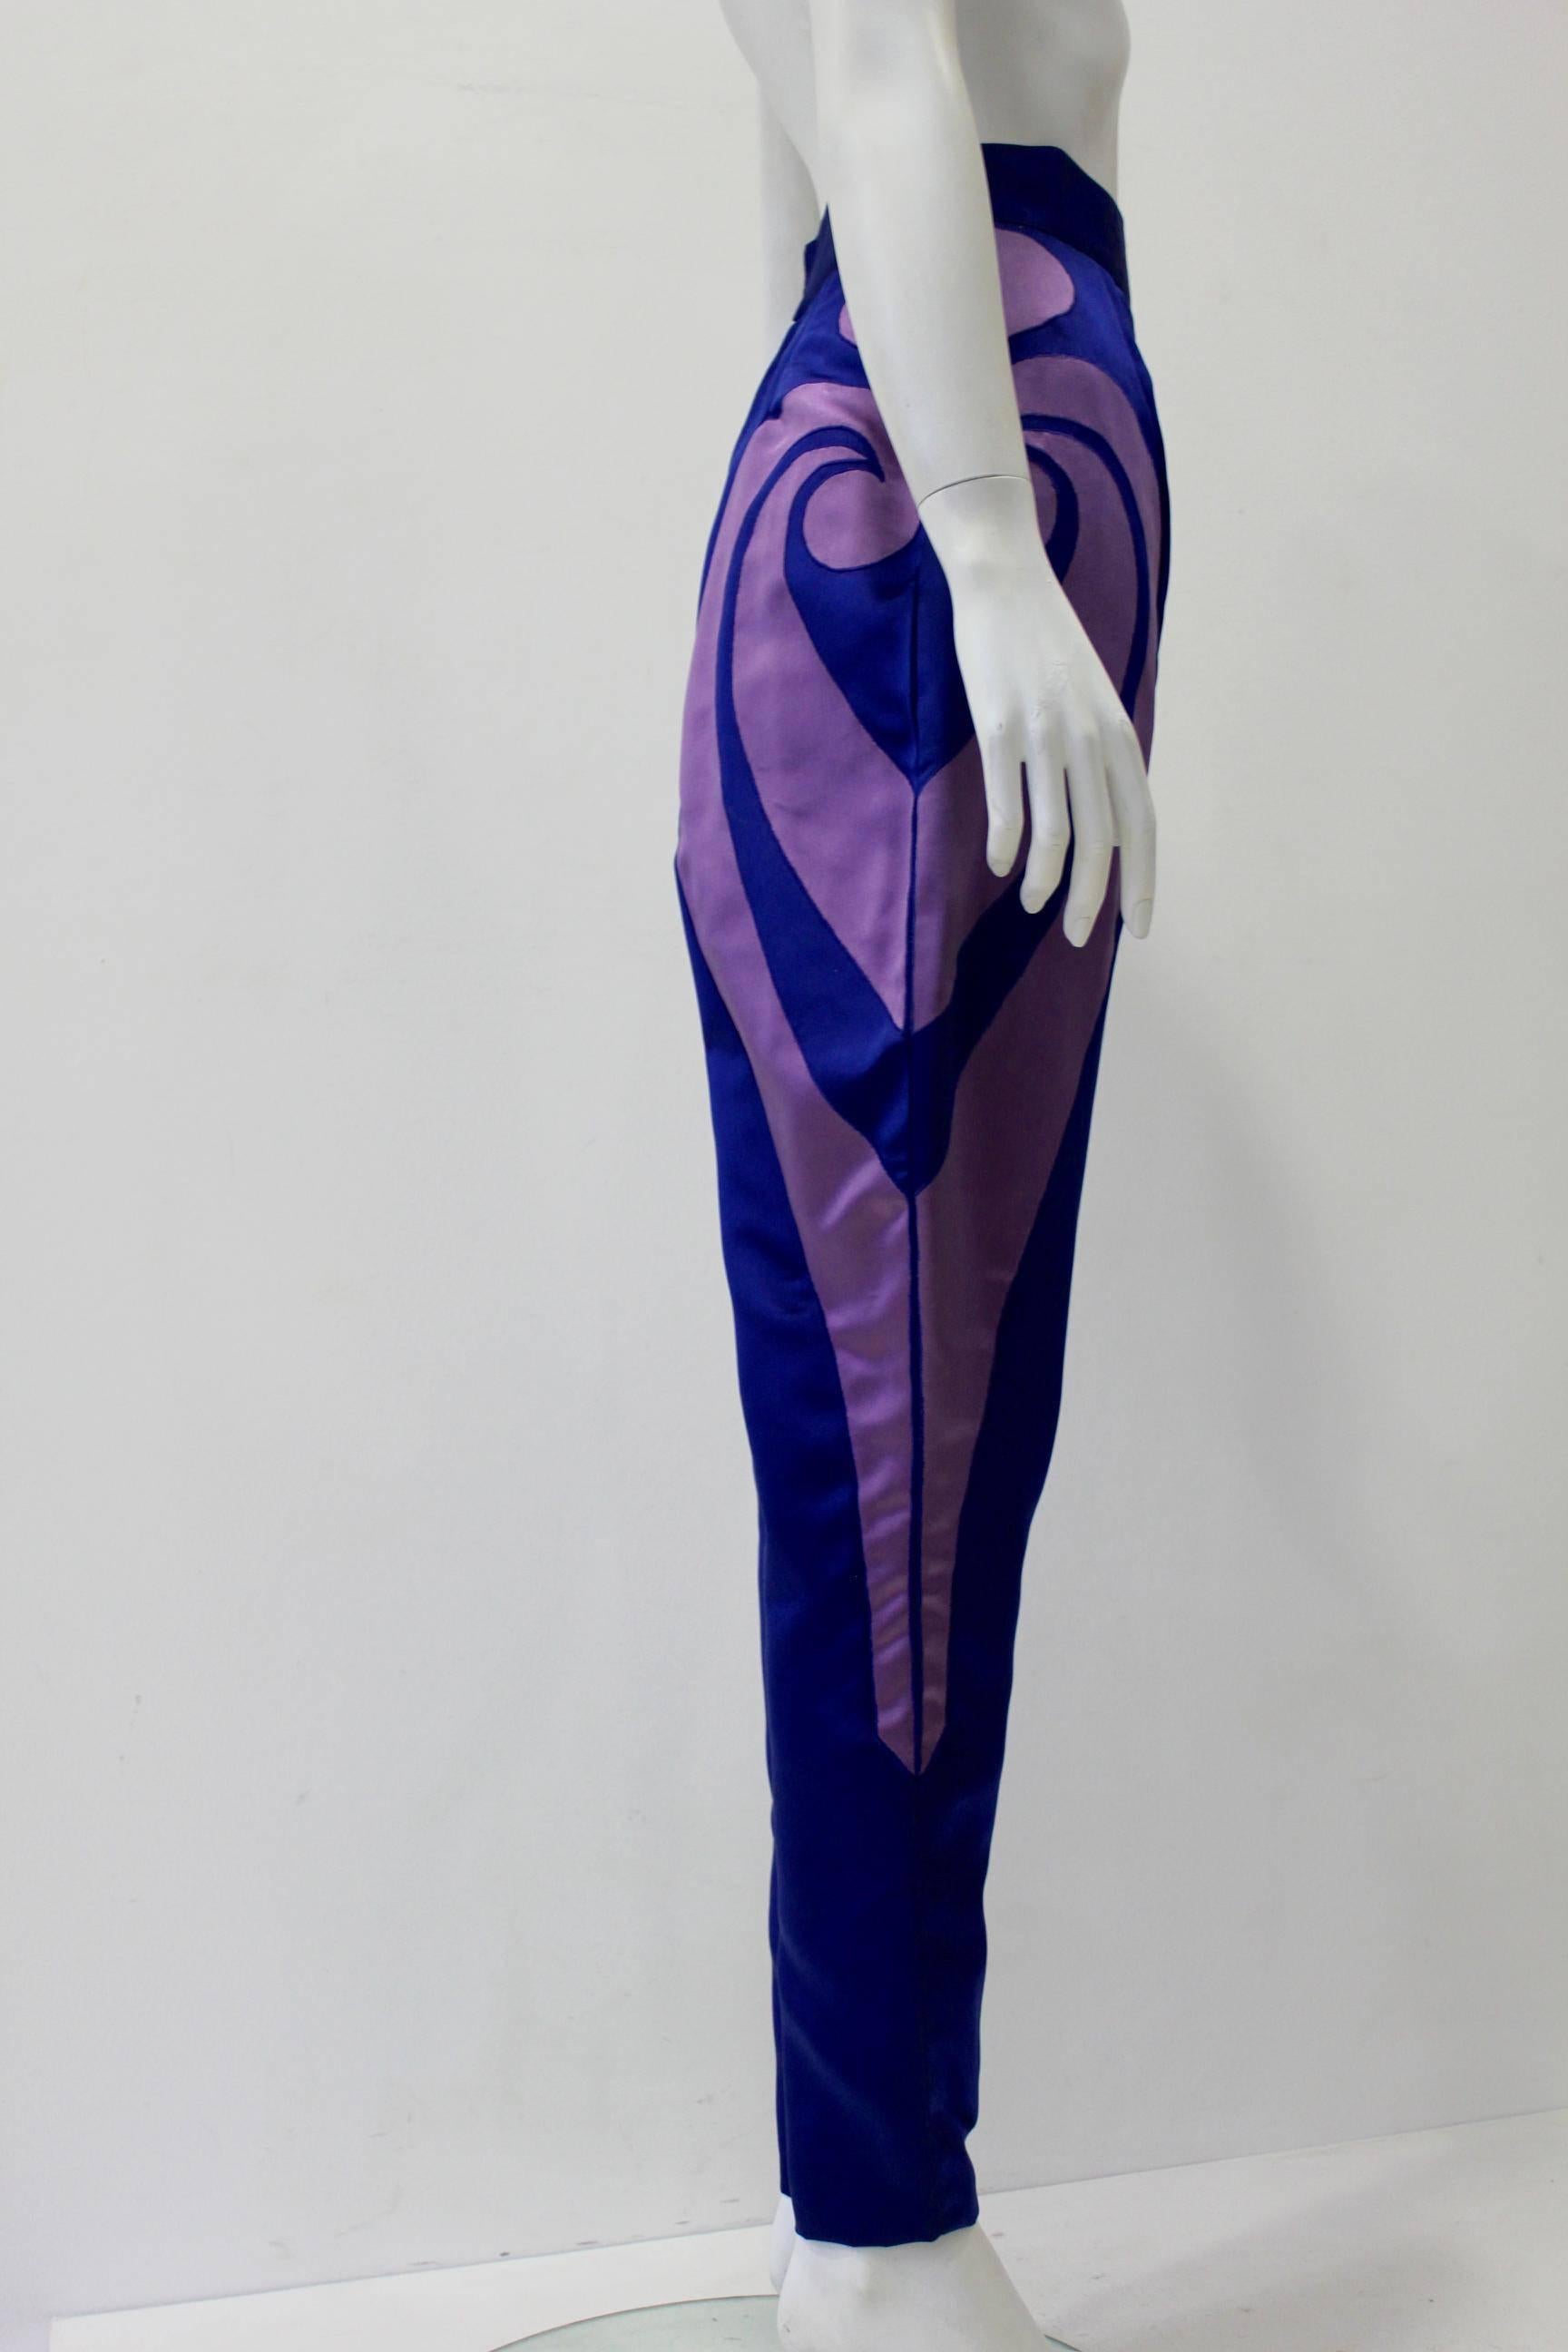 Purple One Of A Kind Gianni Versace Silk Applique Jodhpurs Spring 1990 For Sale